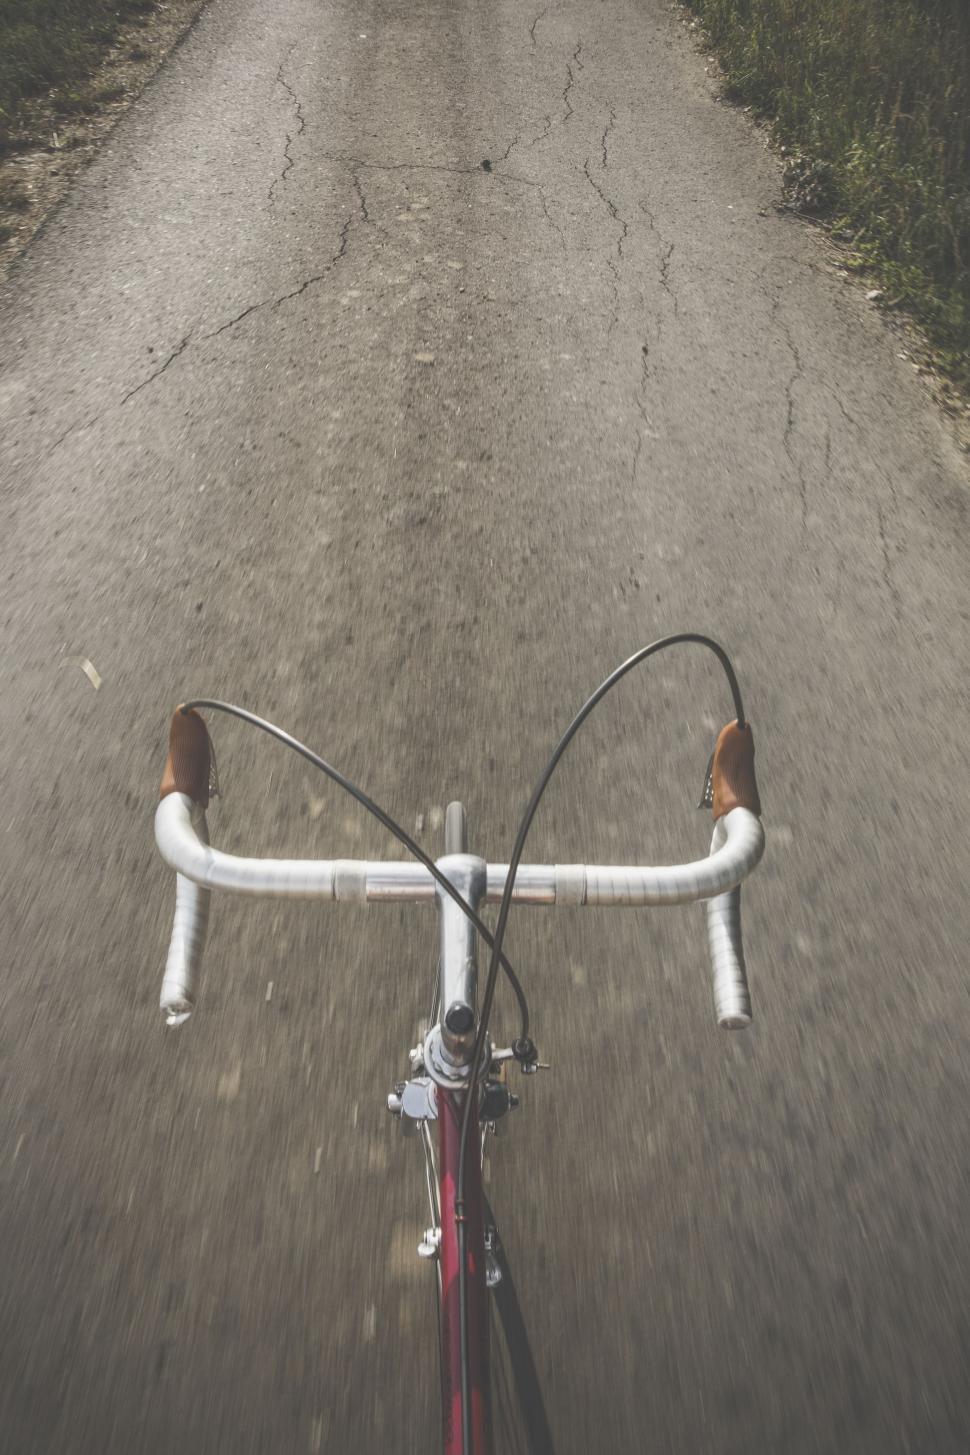 Free Image of Bicycle Handlebars and Road 